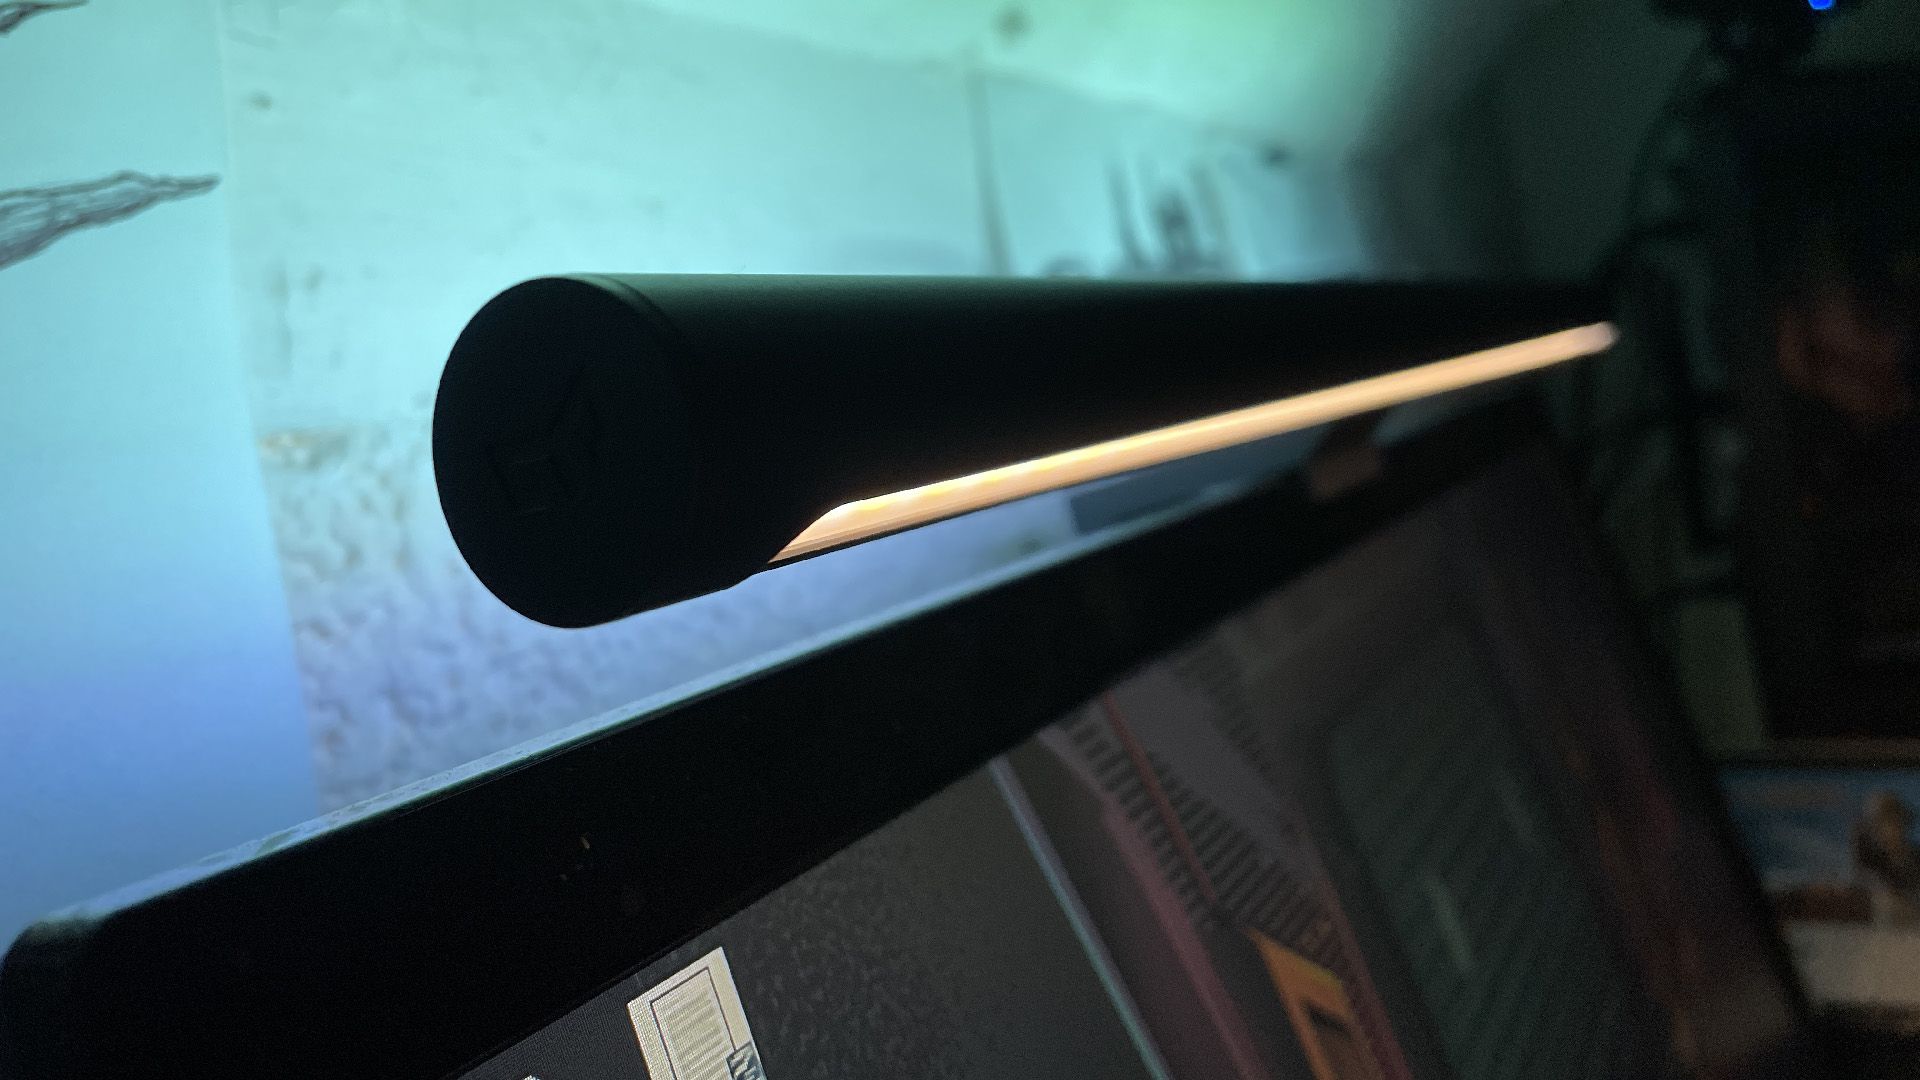 Yeelight LED Screen Light Bar Pro on monitor turned on